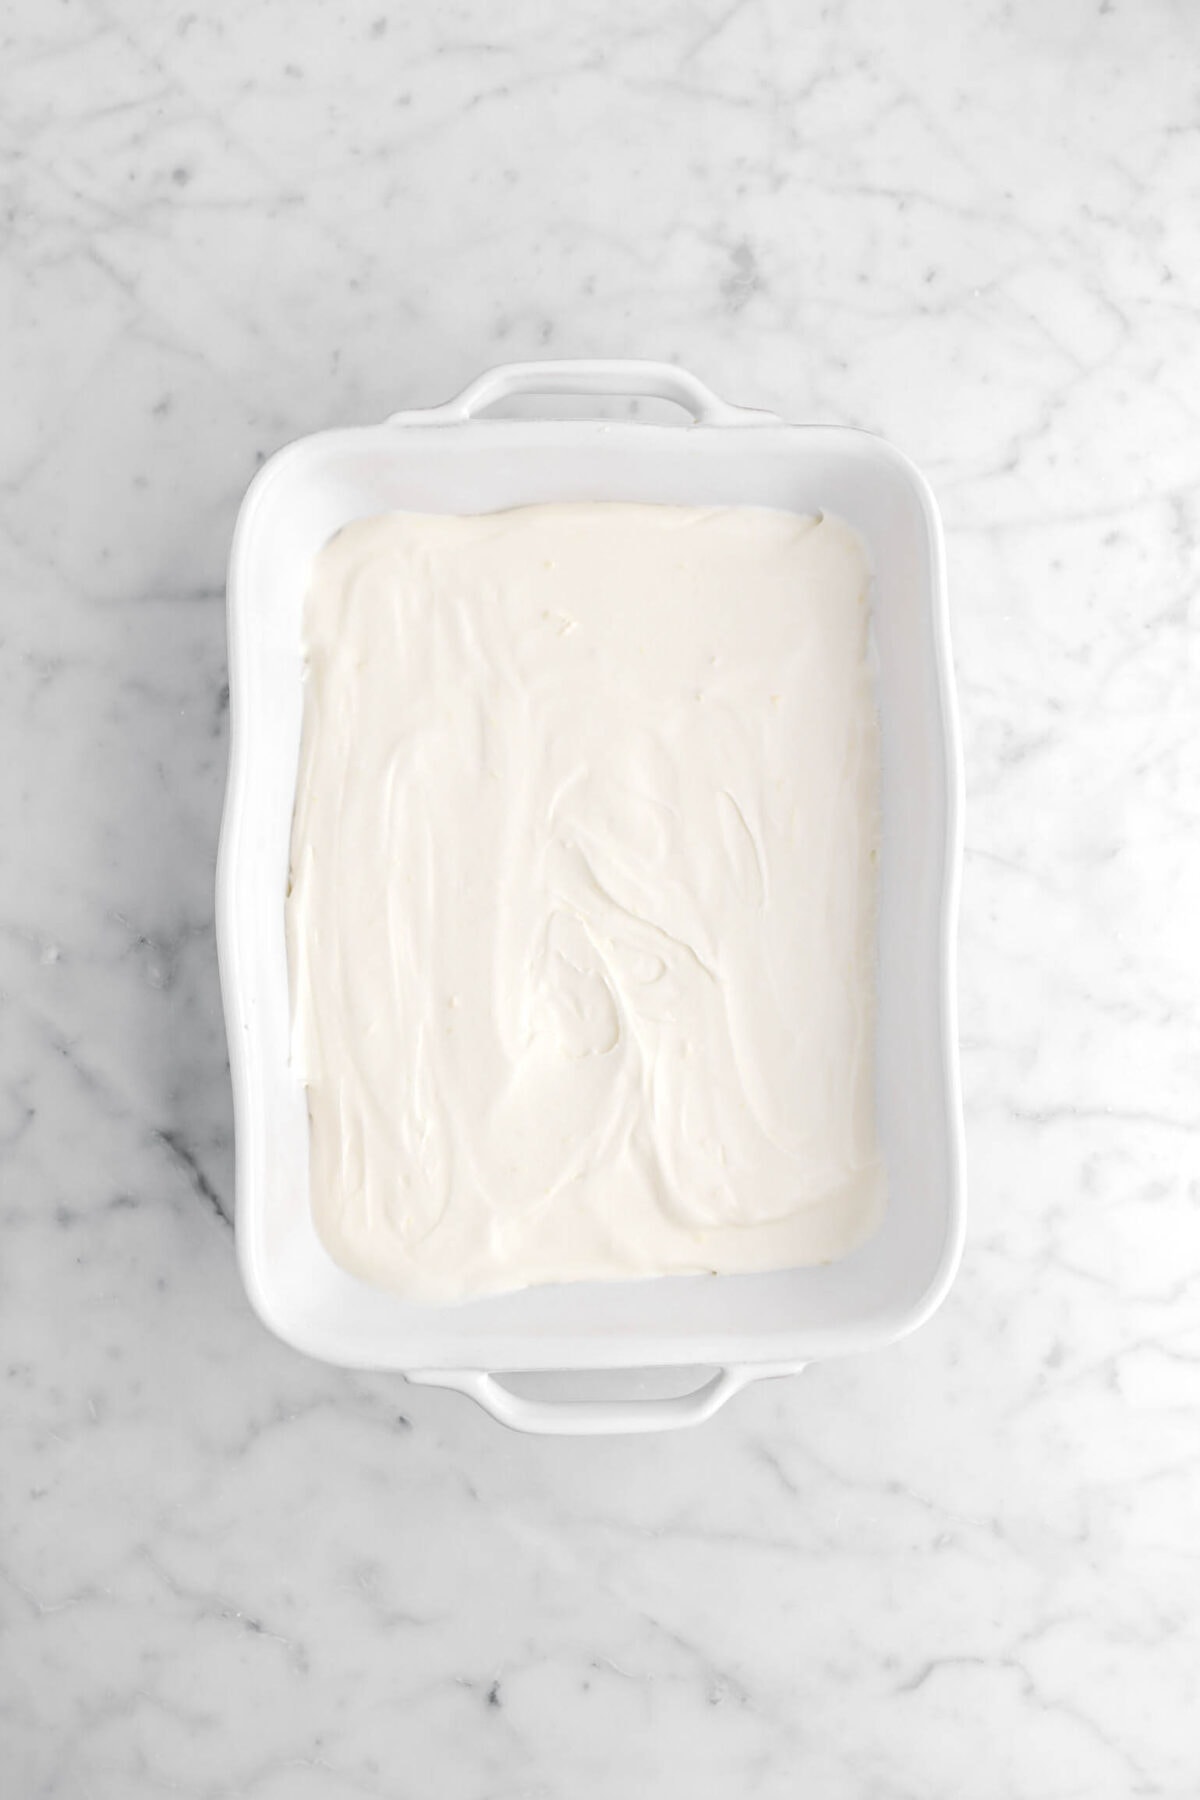 whipped cream spread across casserole. =